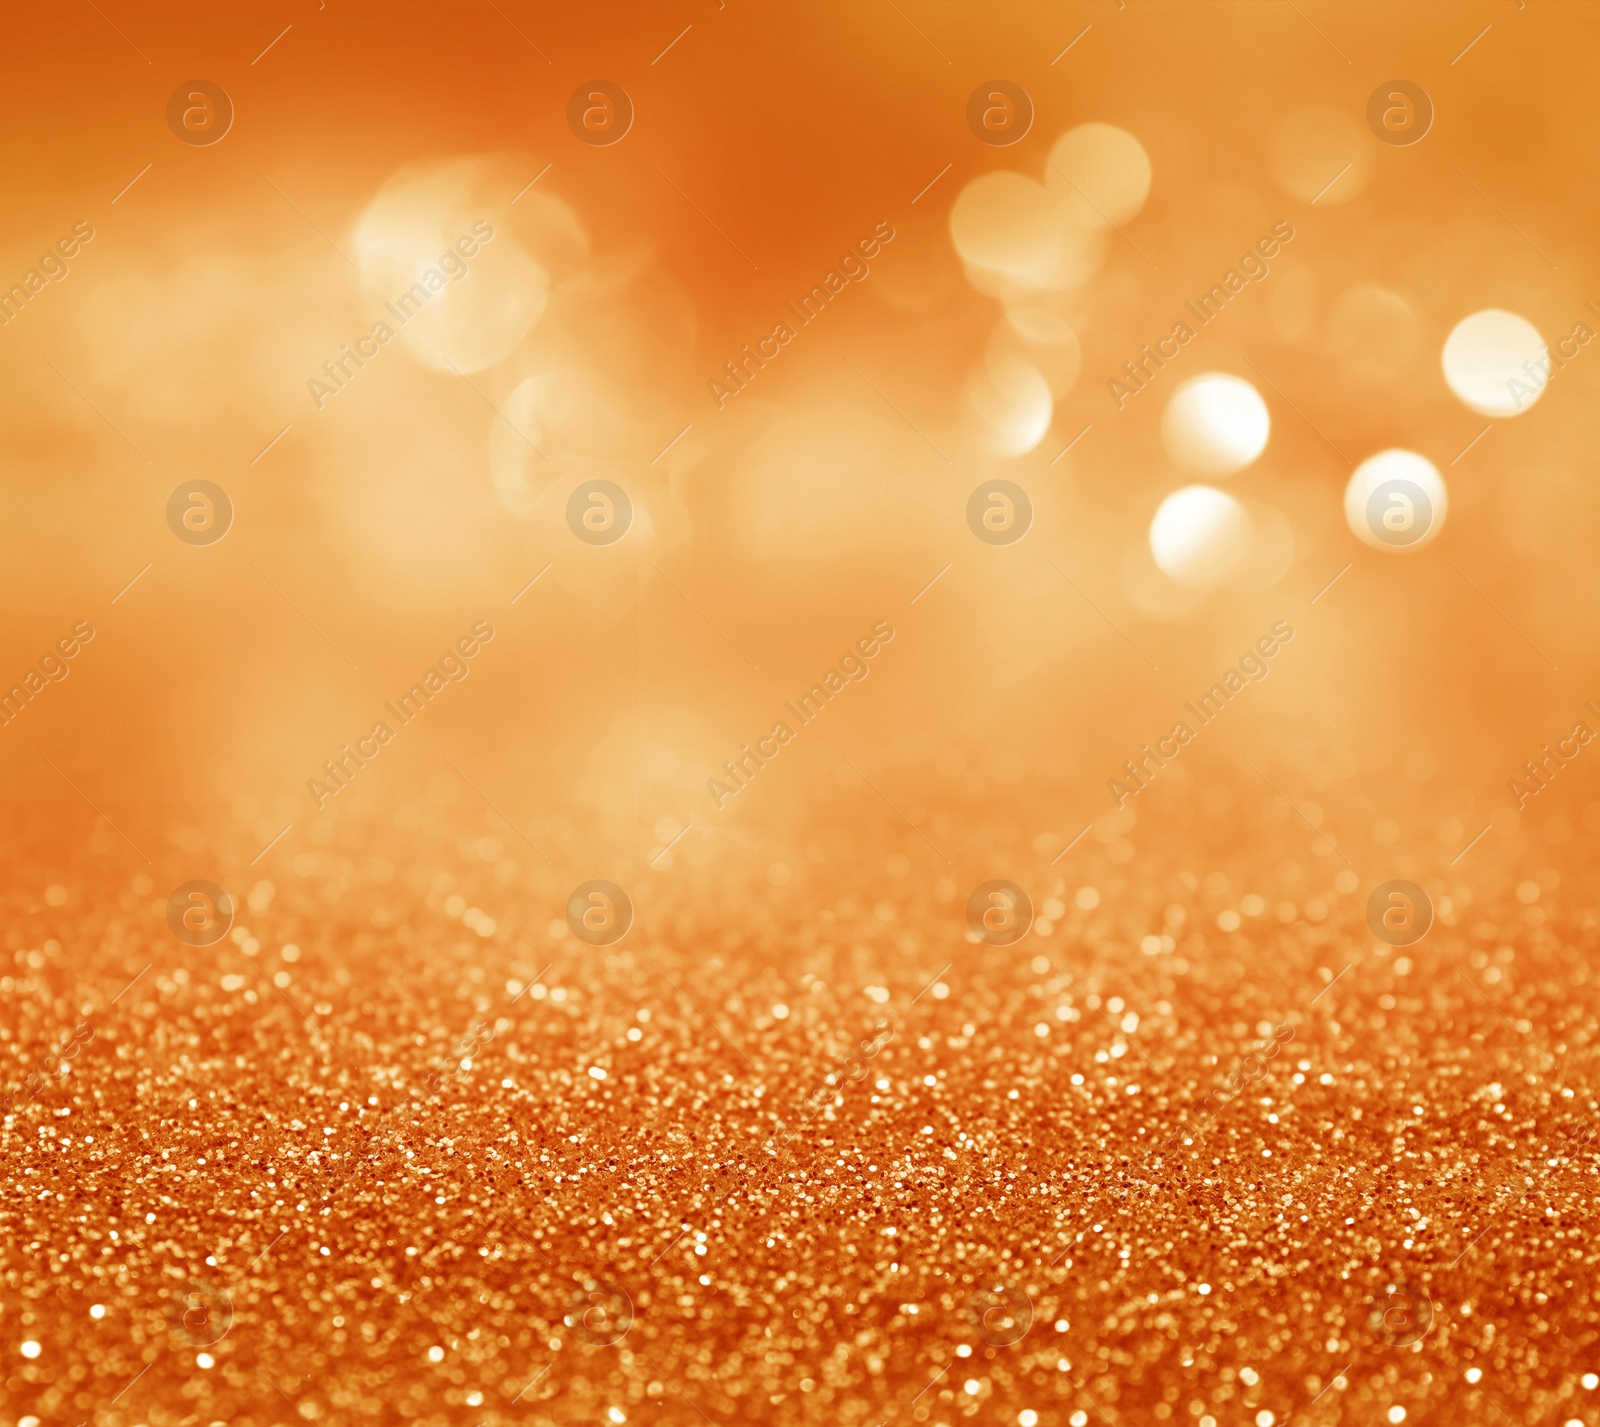 Image of Shiny orange glitter and blurred lights on background. Bokeh effect